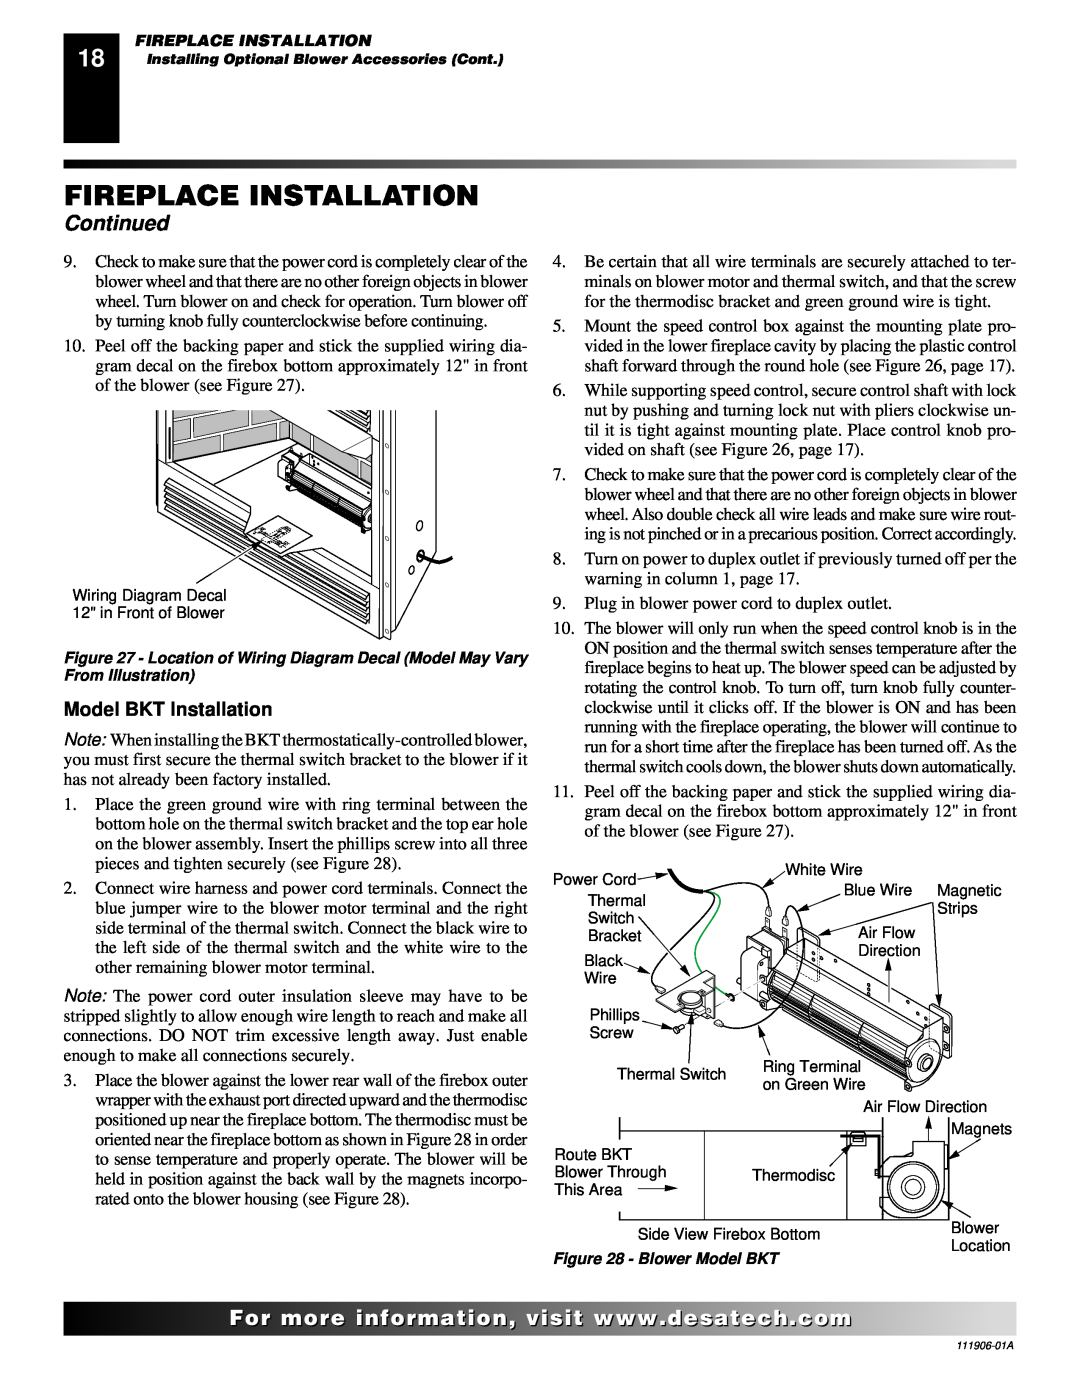 Desa (V)V42NA(1) installation manual Fireplace Installation, Continued, Model BKT Installation 